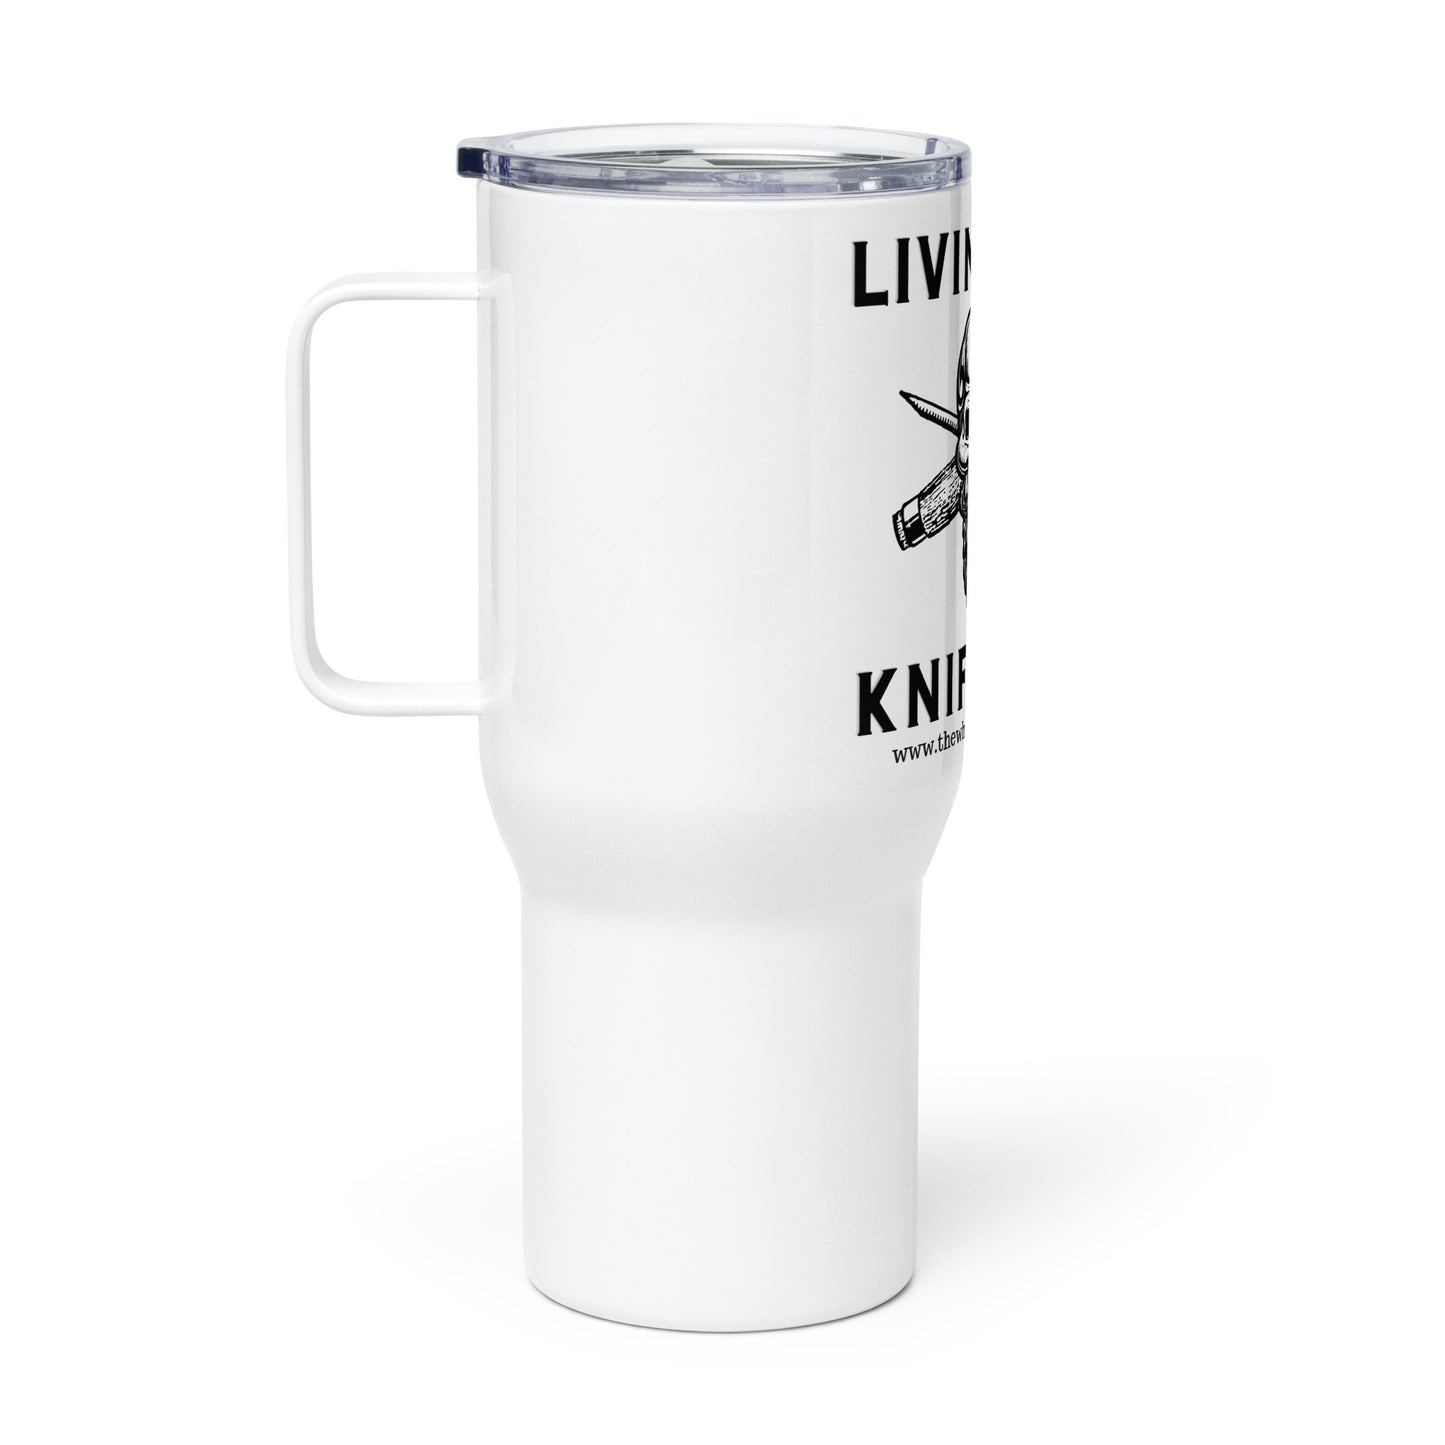 Living the Knife Life - Travel mug with a handle